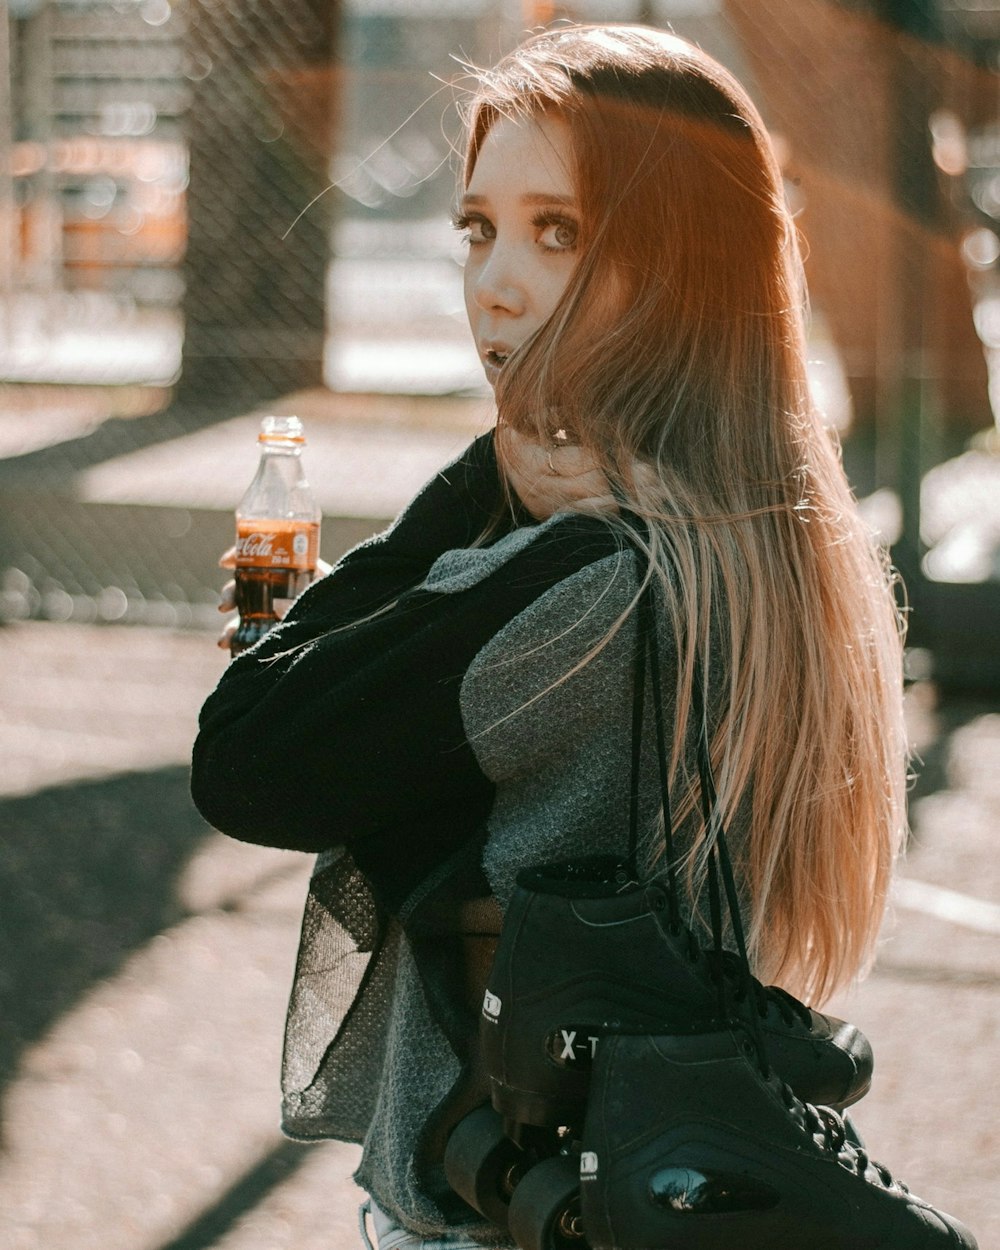 woman wearing black and gray jacket holding bottle of coke